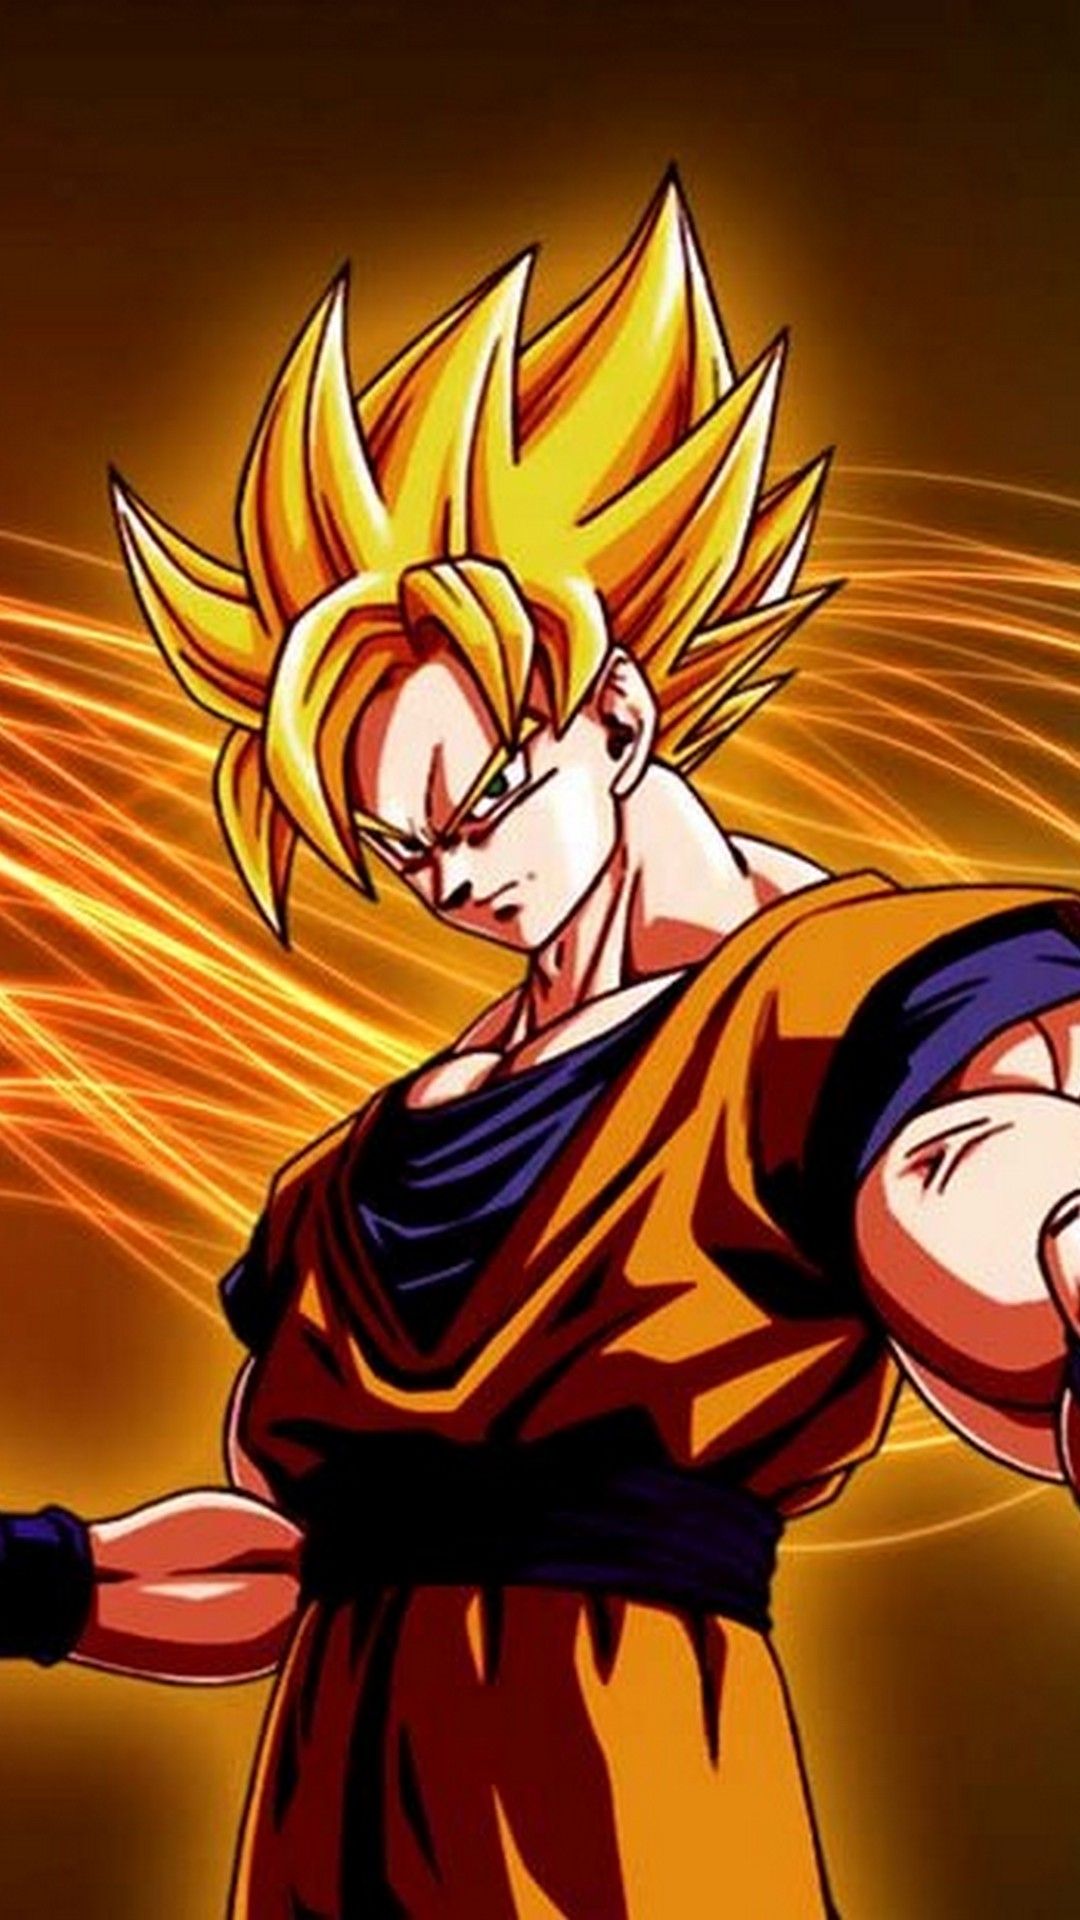 Super Power Anime Goku Wallpaper Free Download